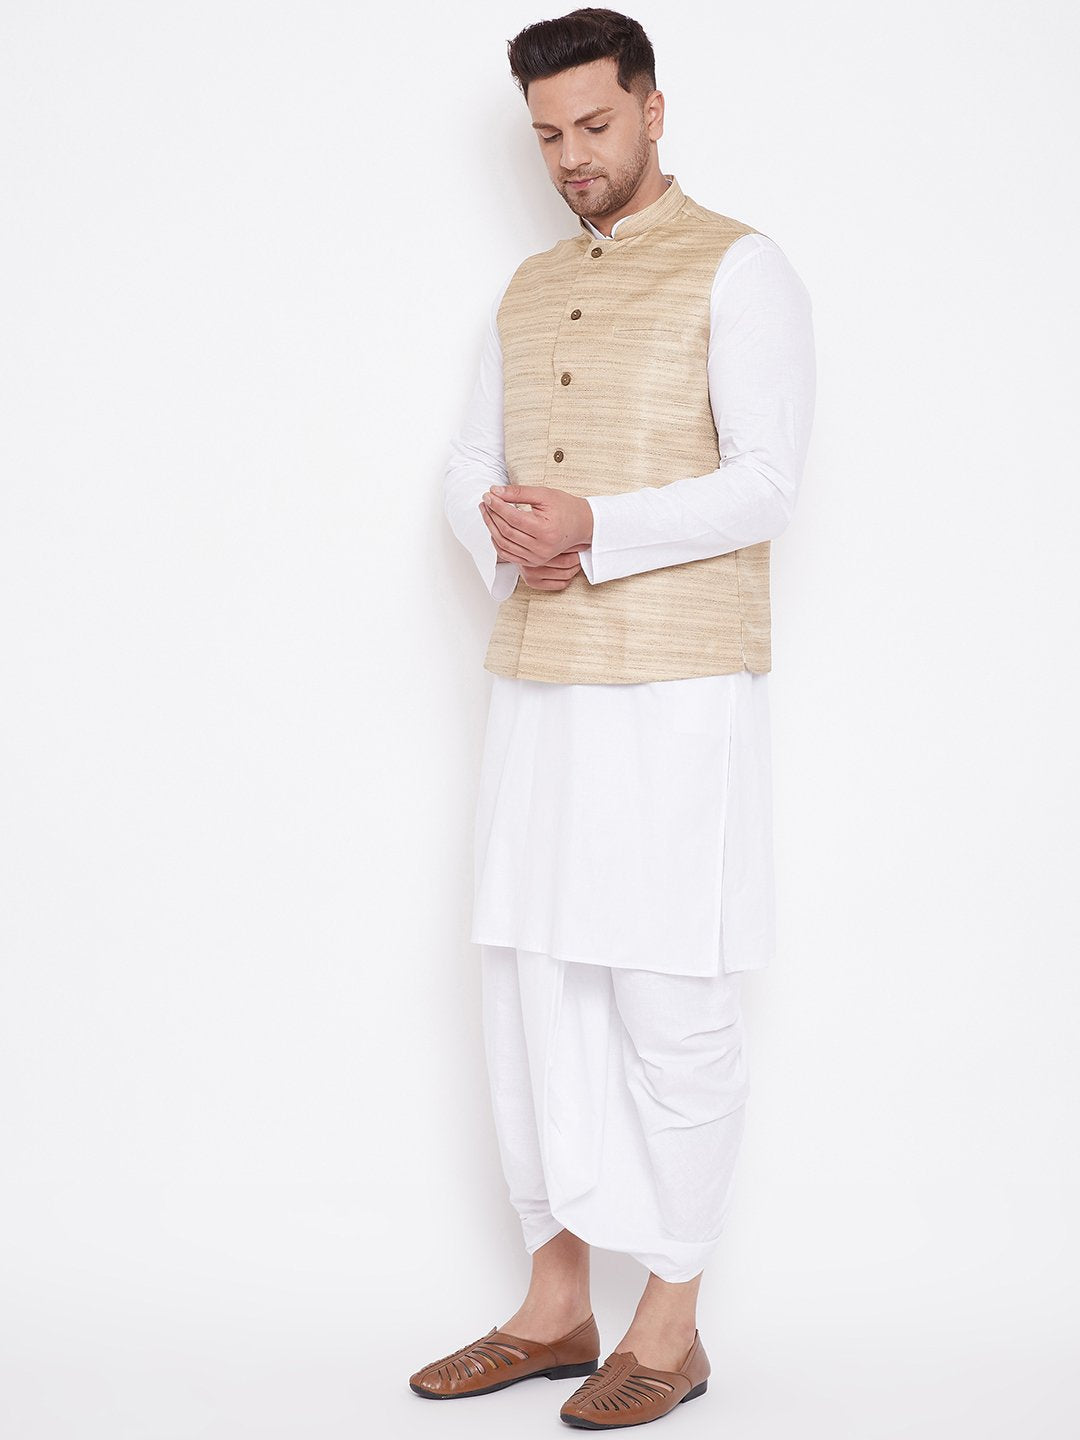 Men's Beige And White Cotton Blend Jacket, Kurta and Dhoti Set - Vastramay